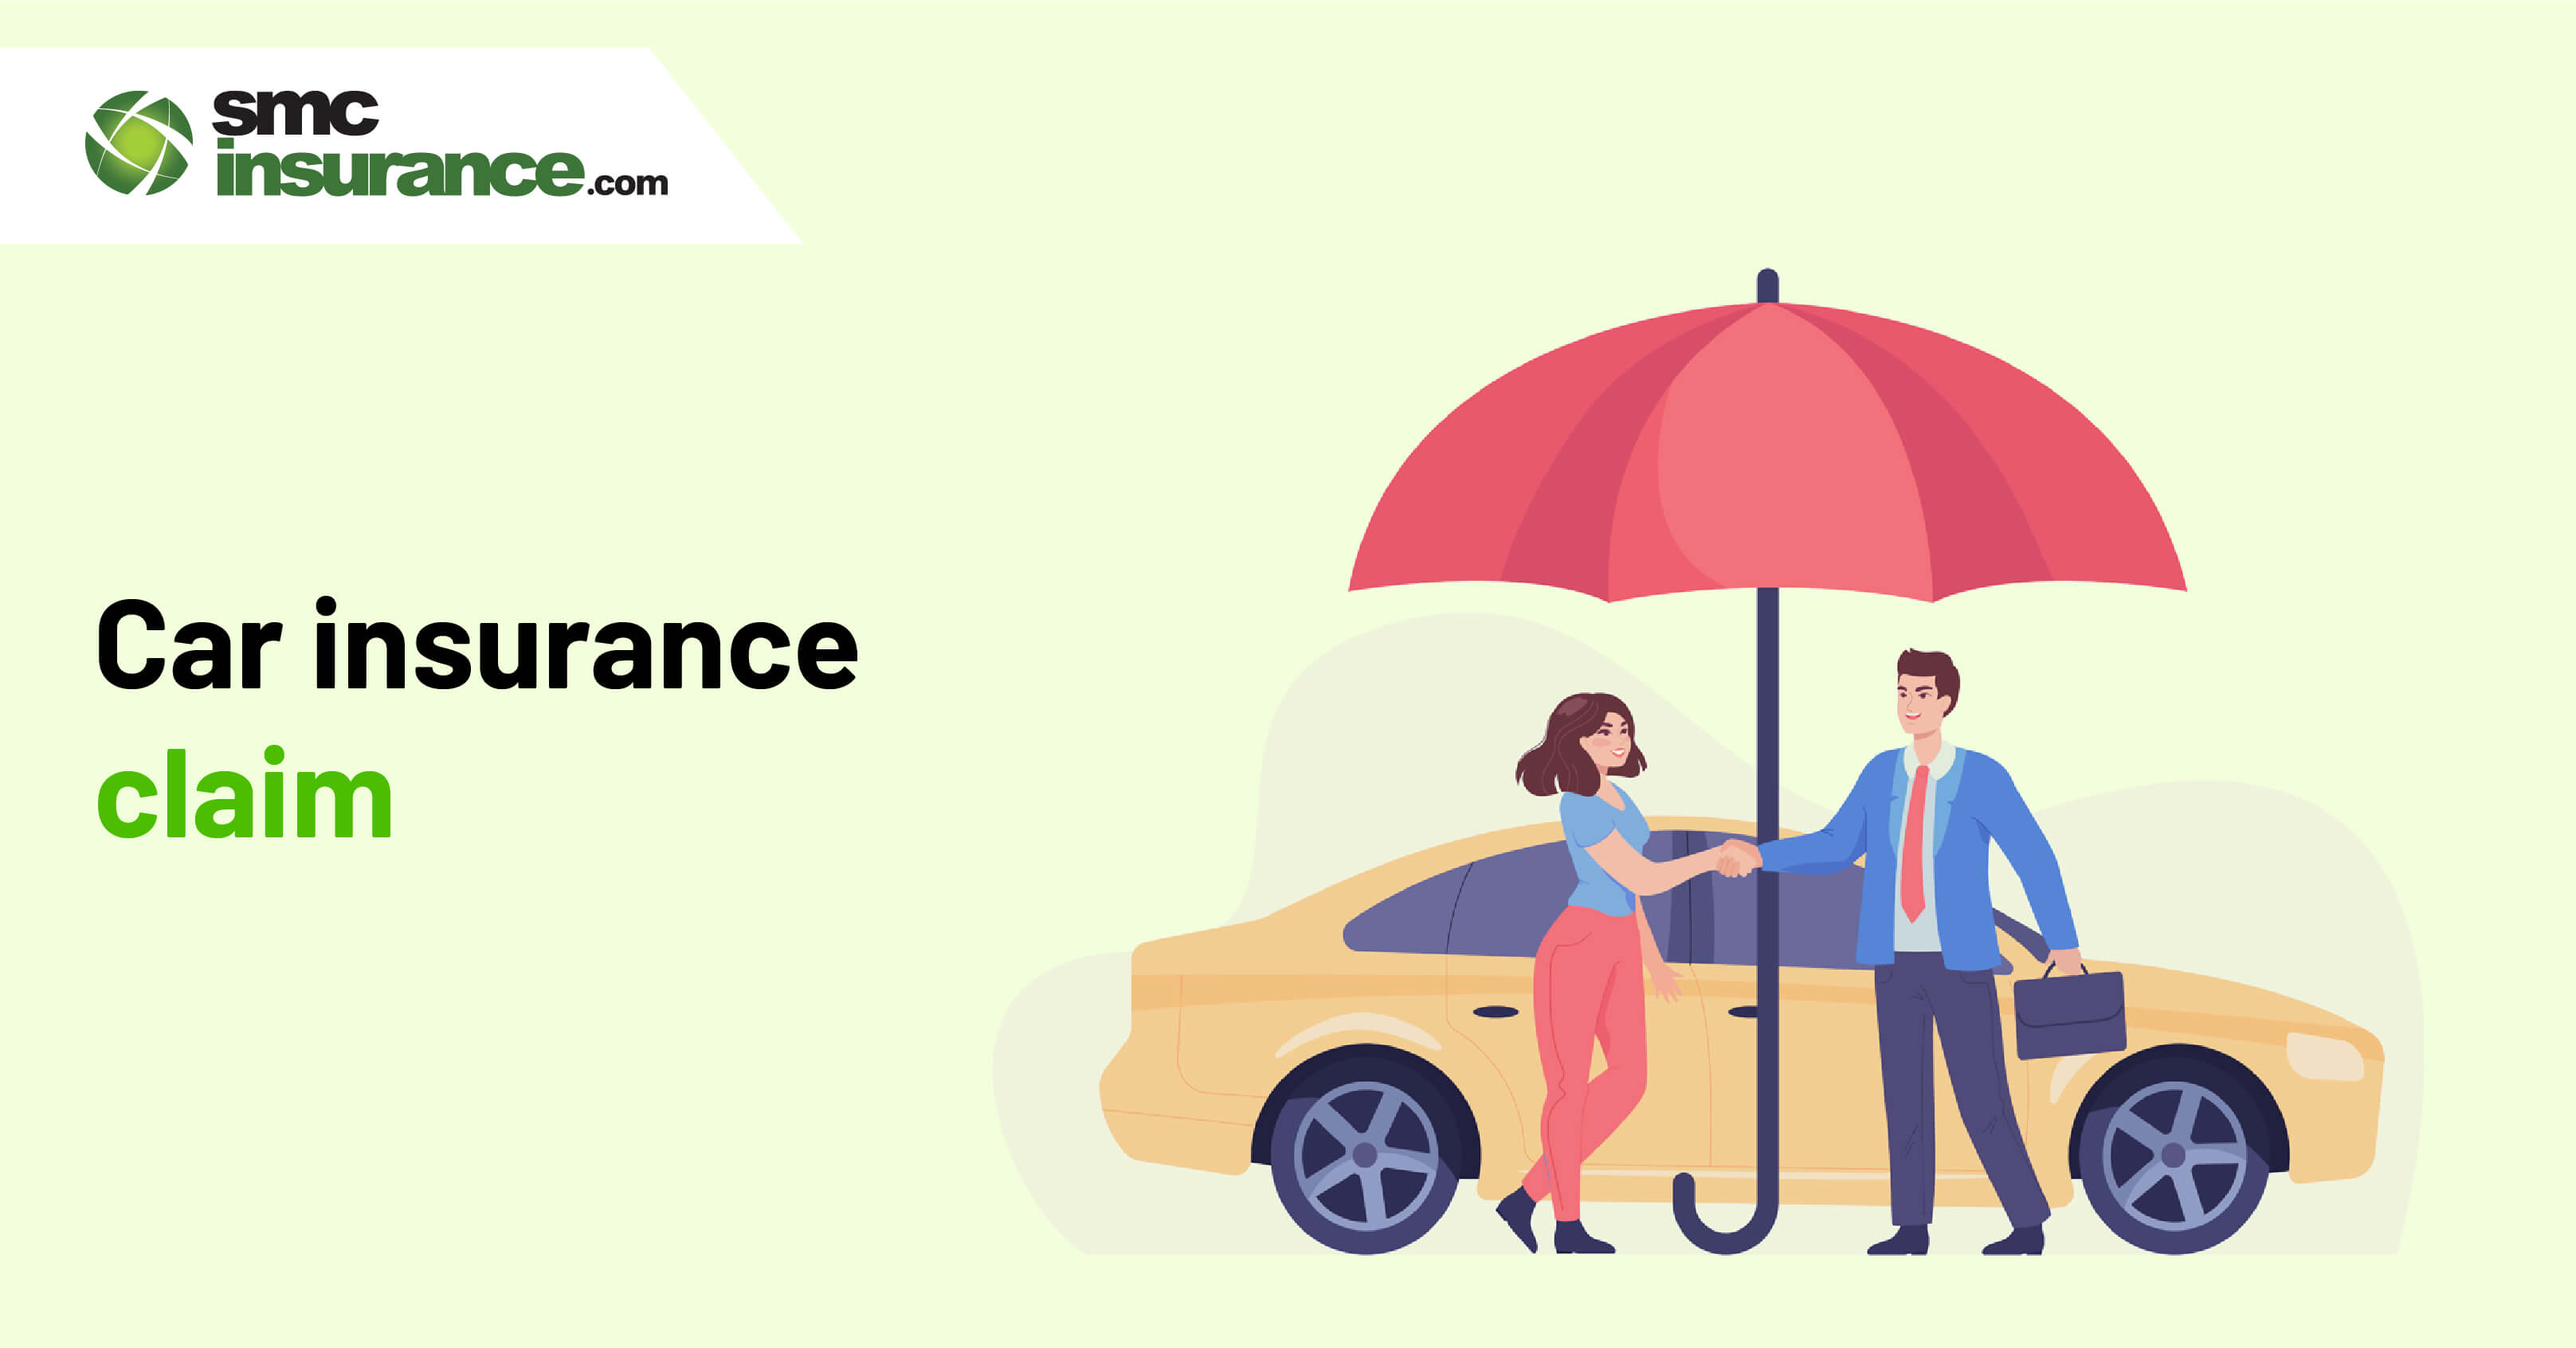 How To Make A Car Insurance Claim?